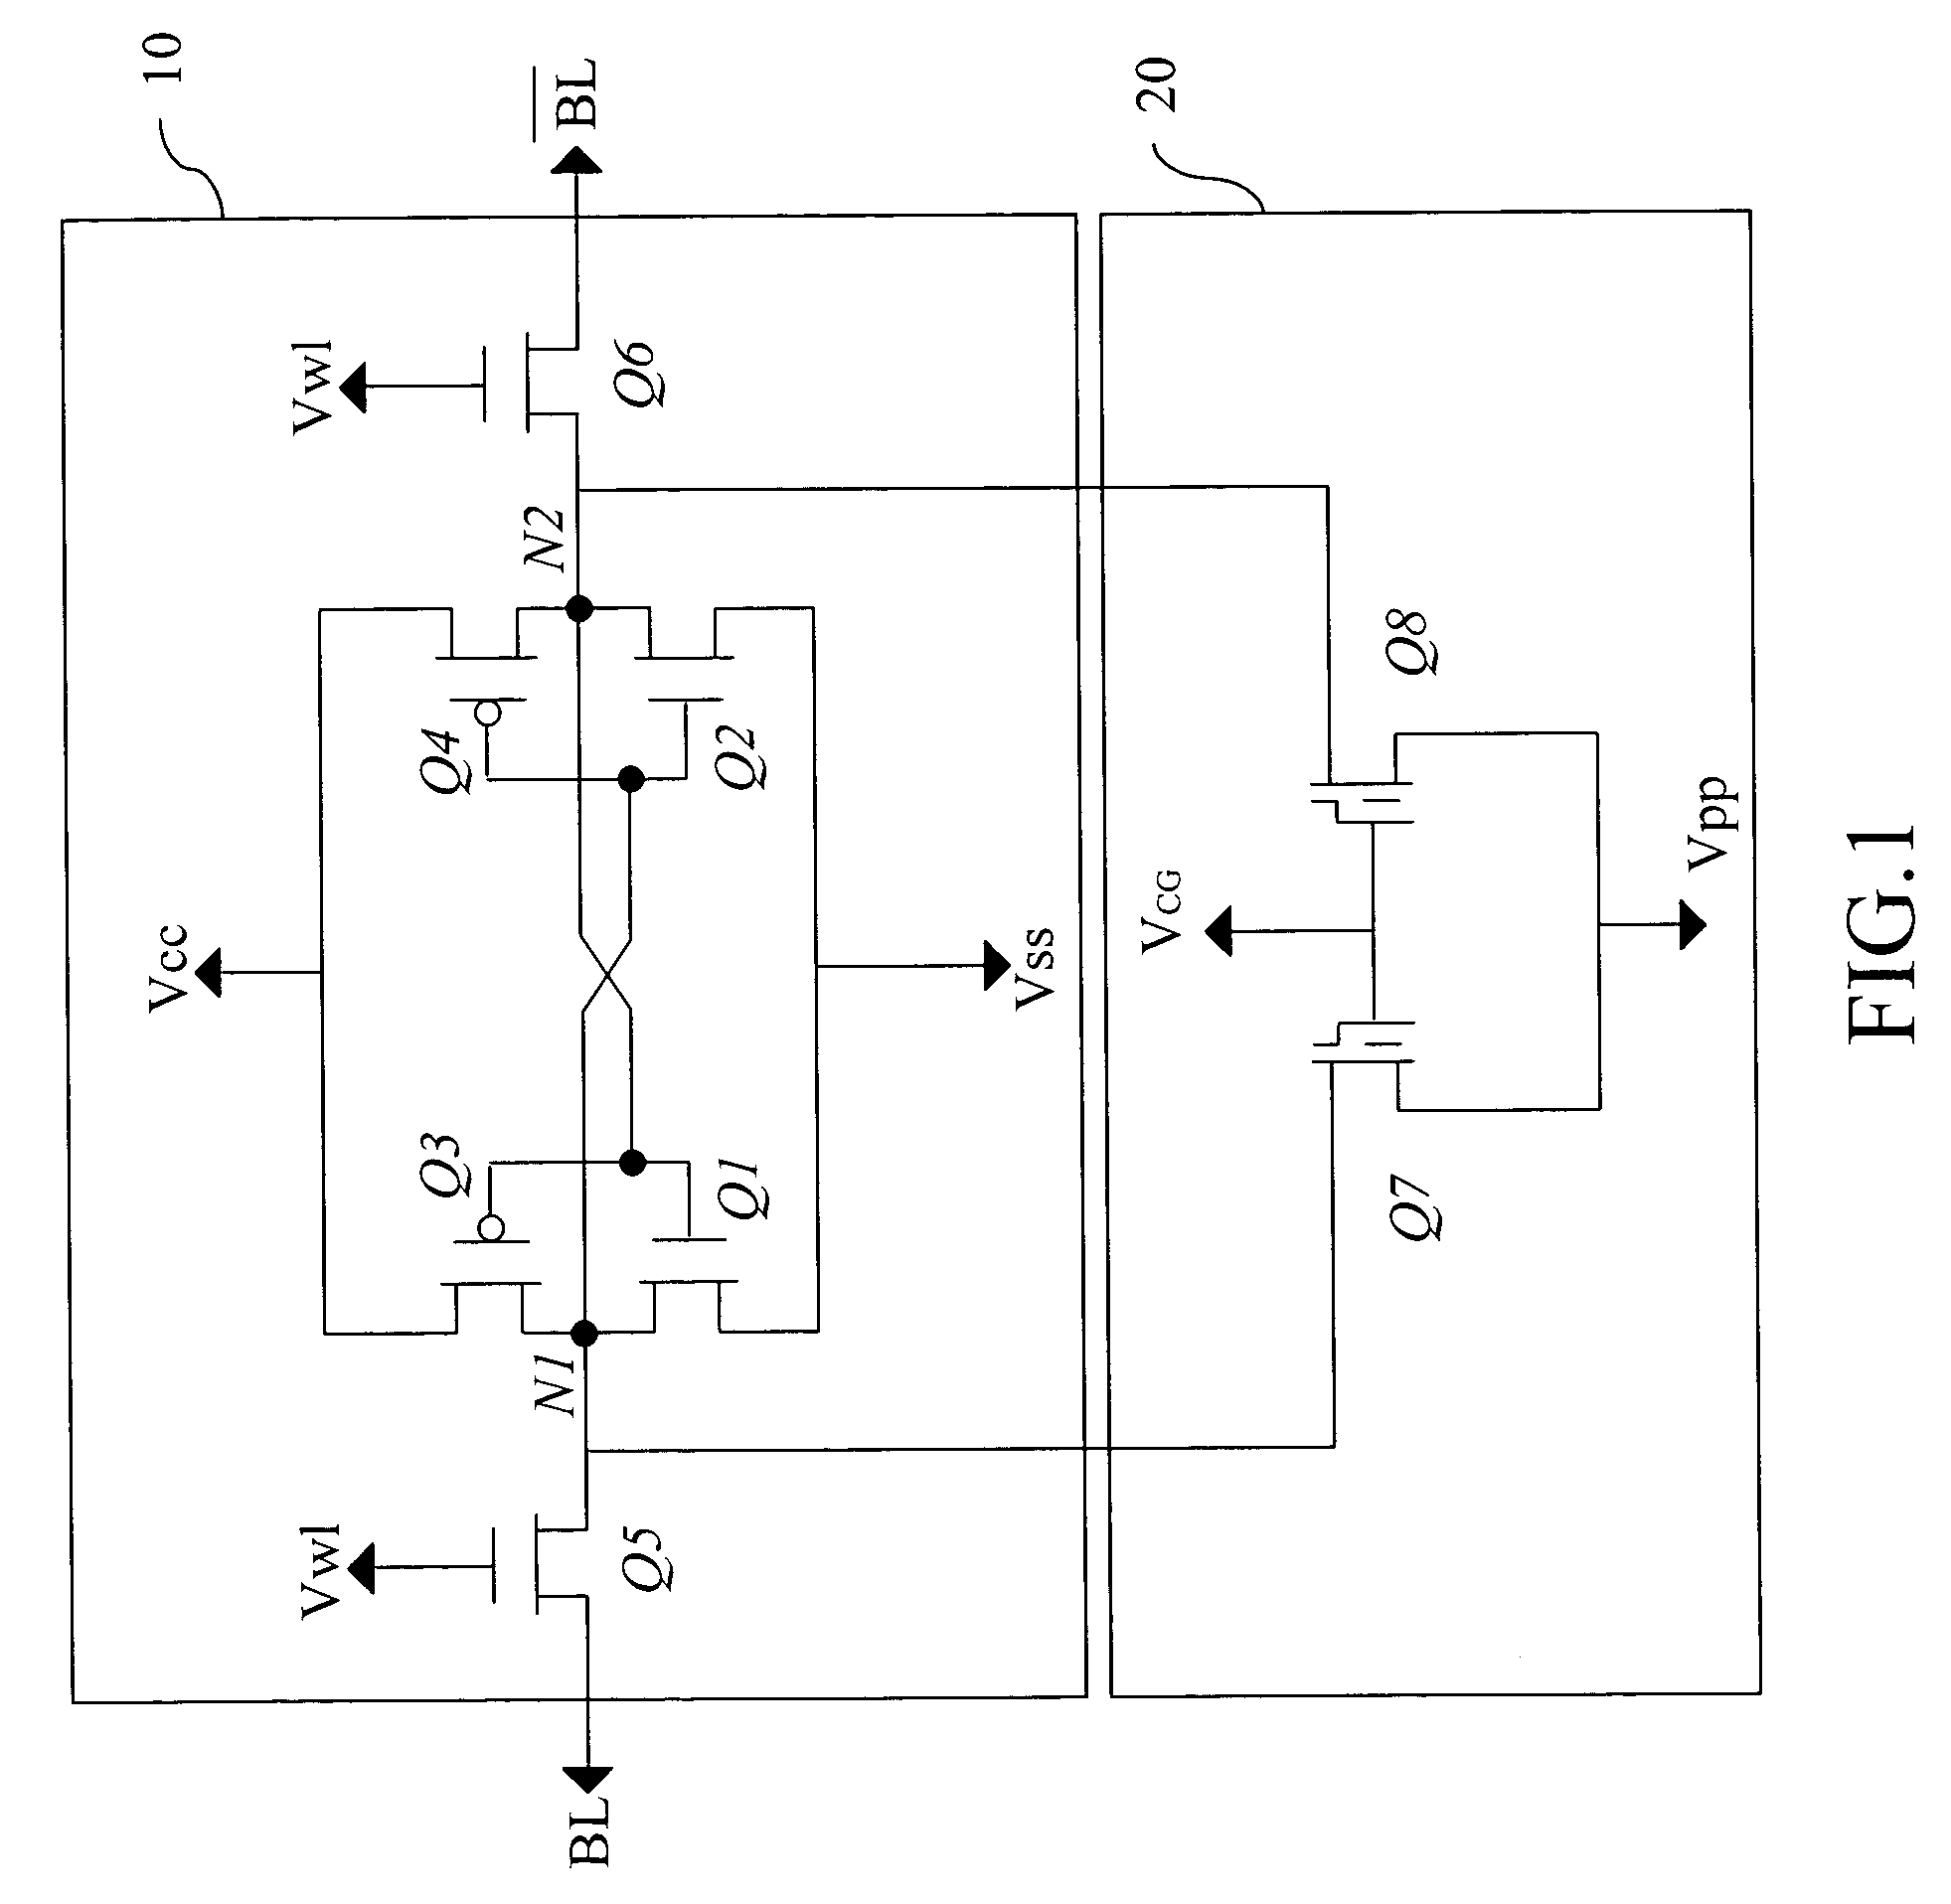 Non-volatile SRAM cell having split-gate transistors